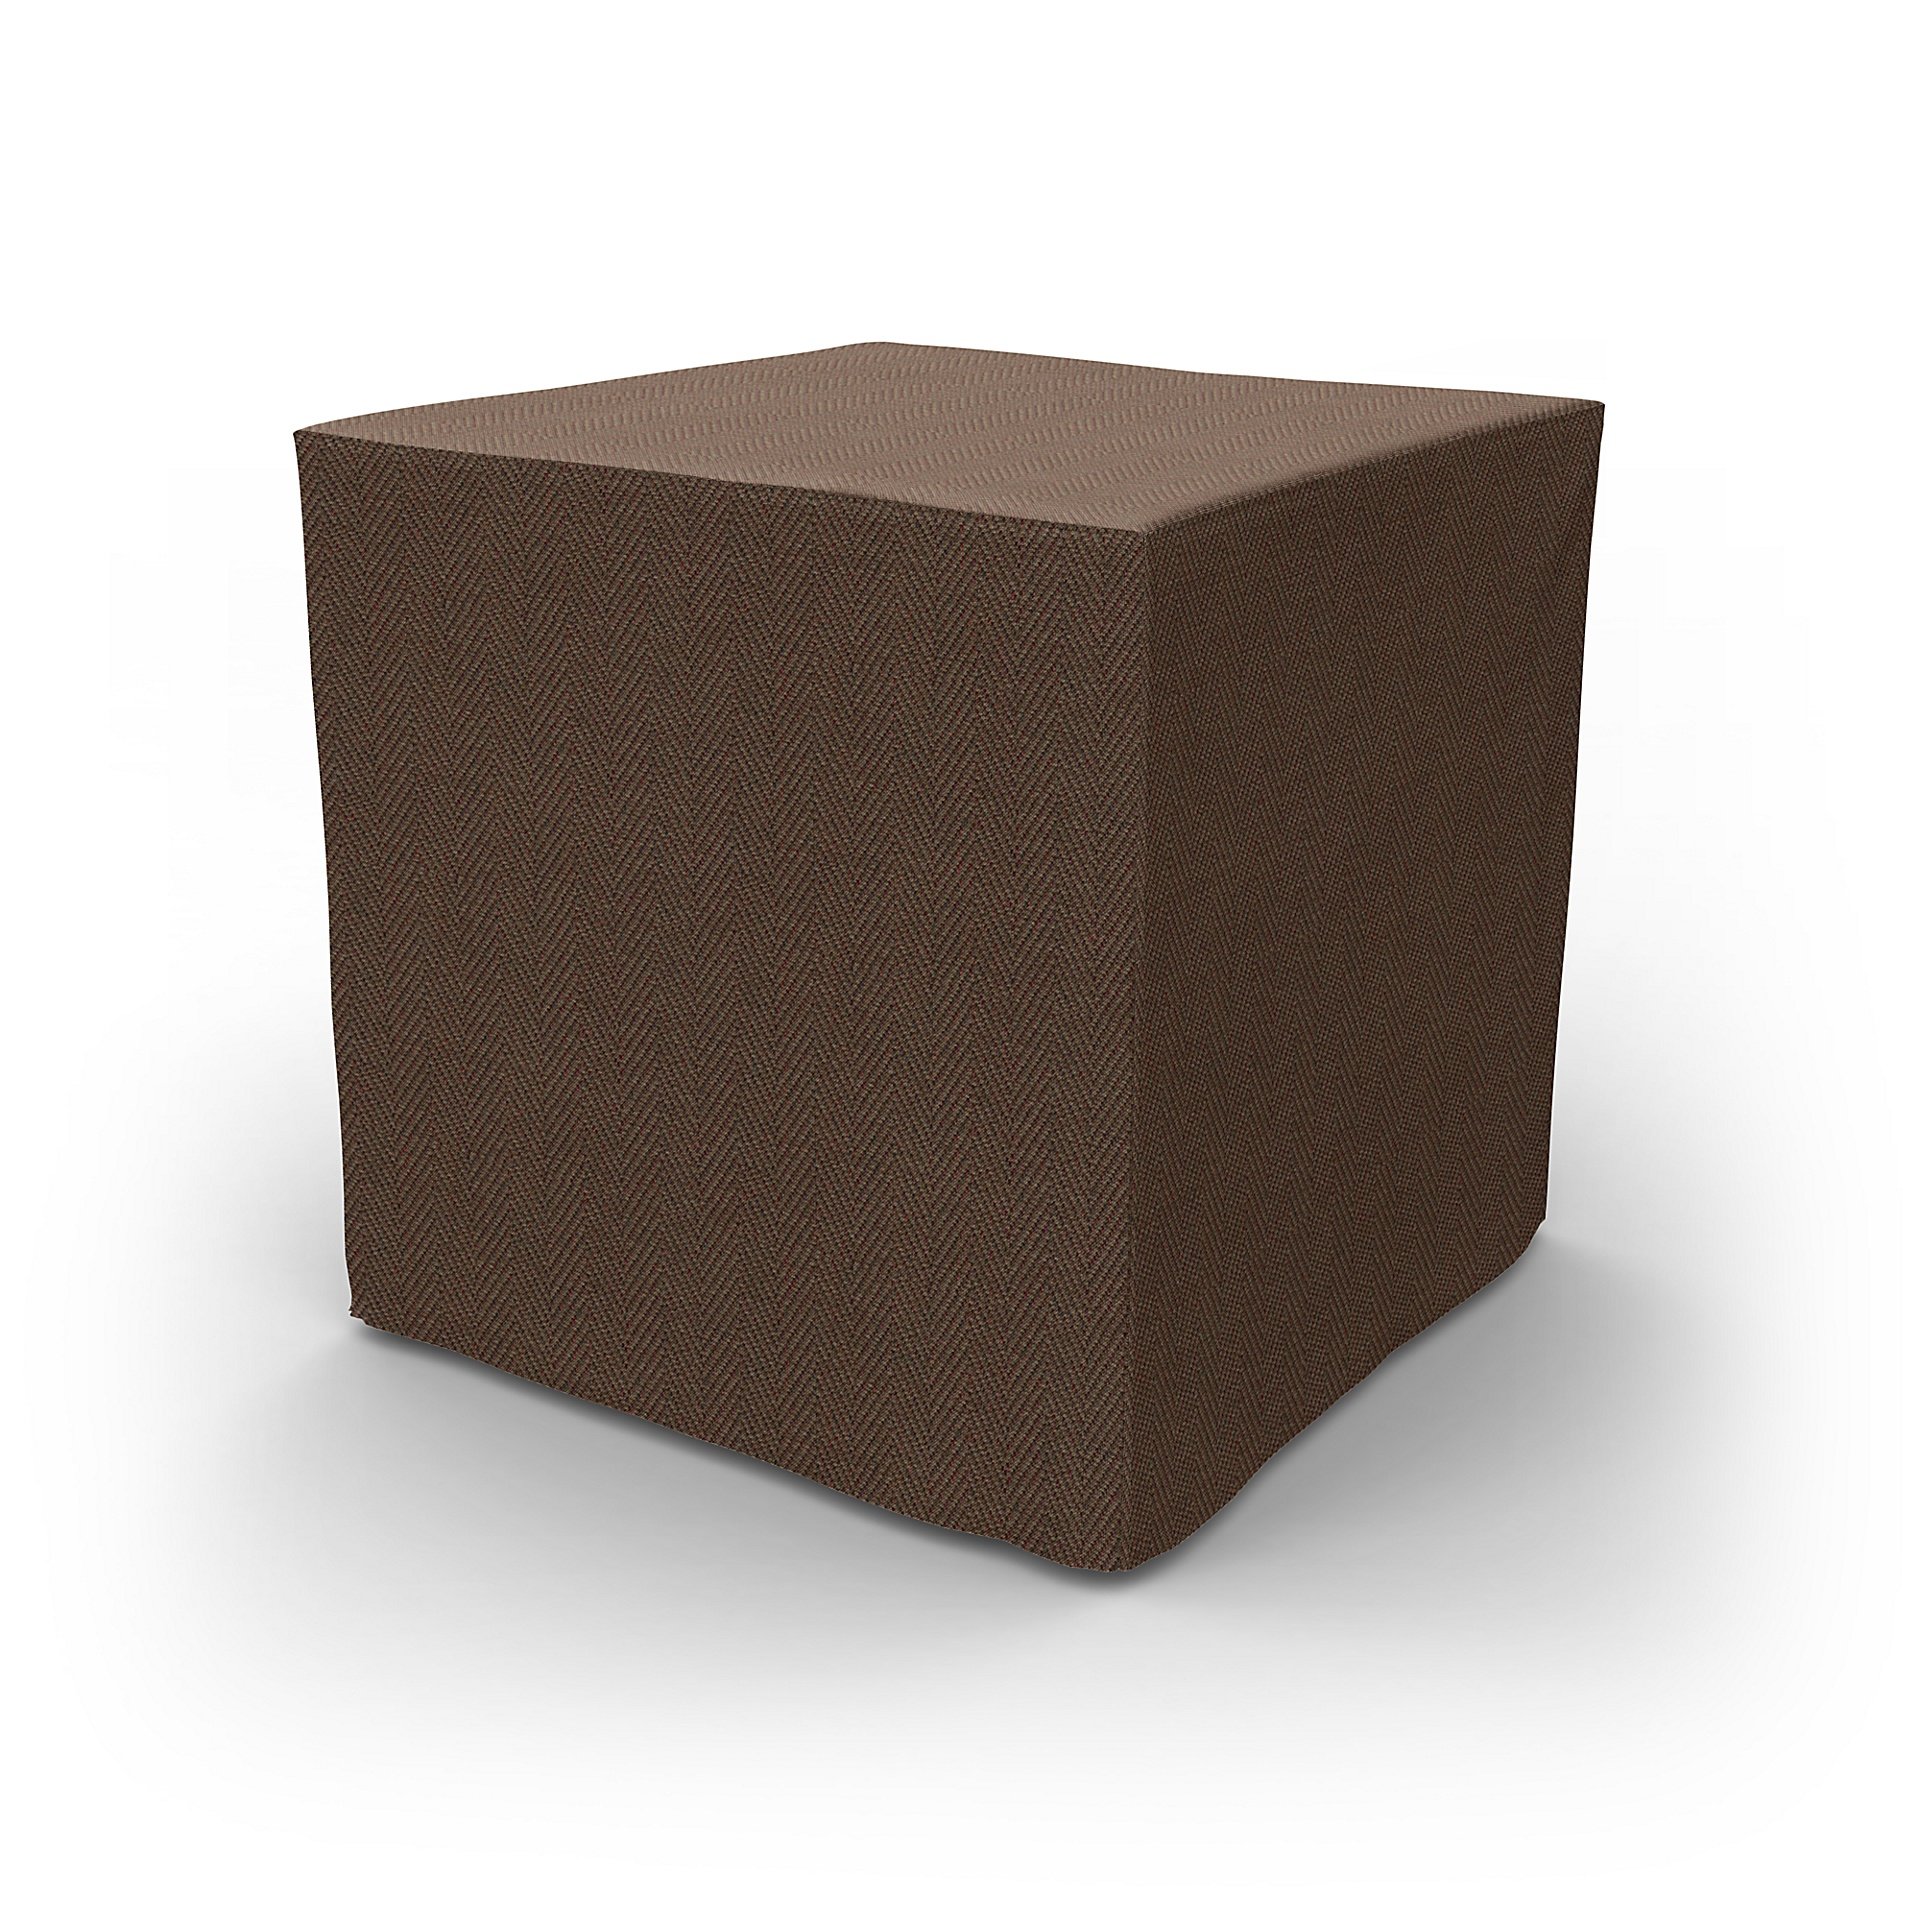 IKEA - Pallbo Footstool Cover, Chocolate, Boucle & Texture - Bemz